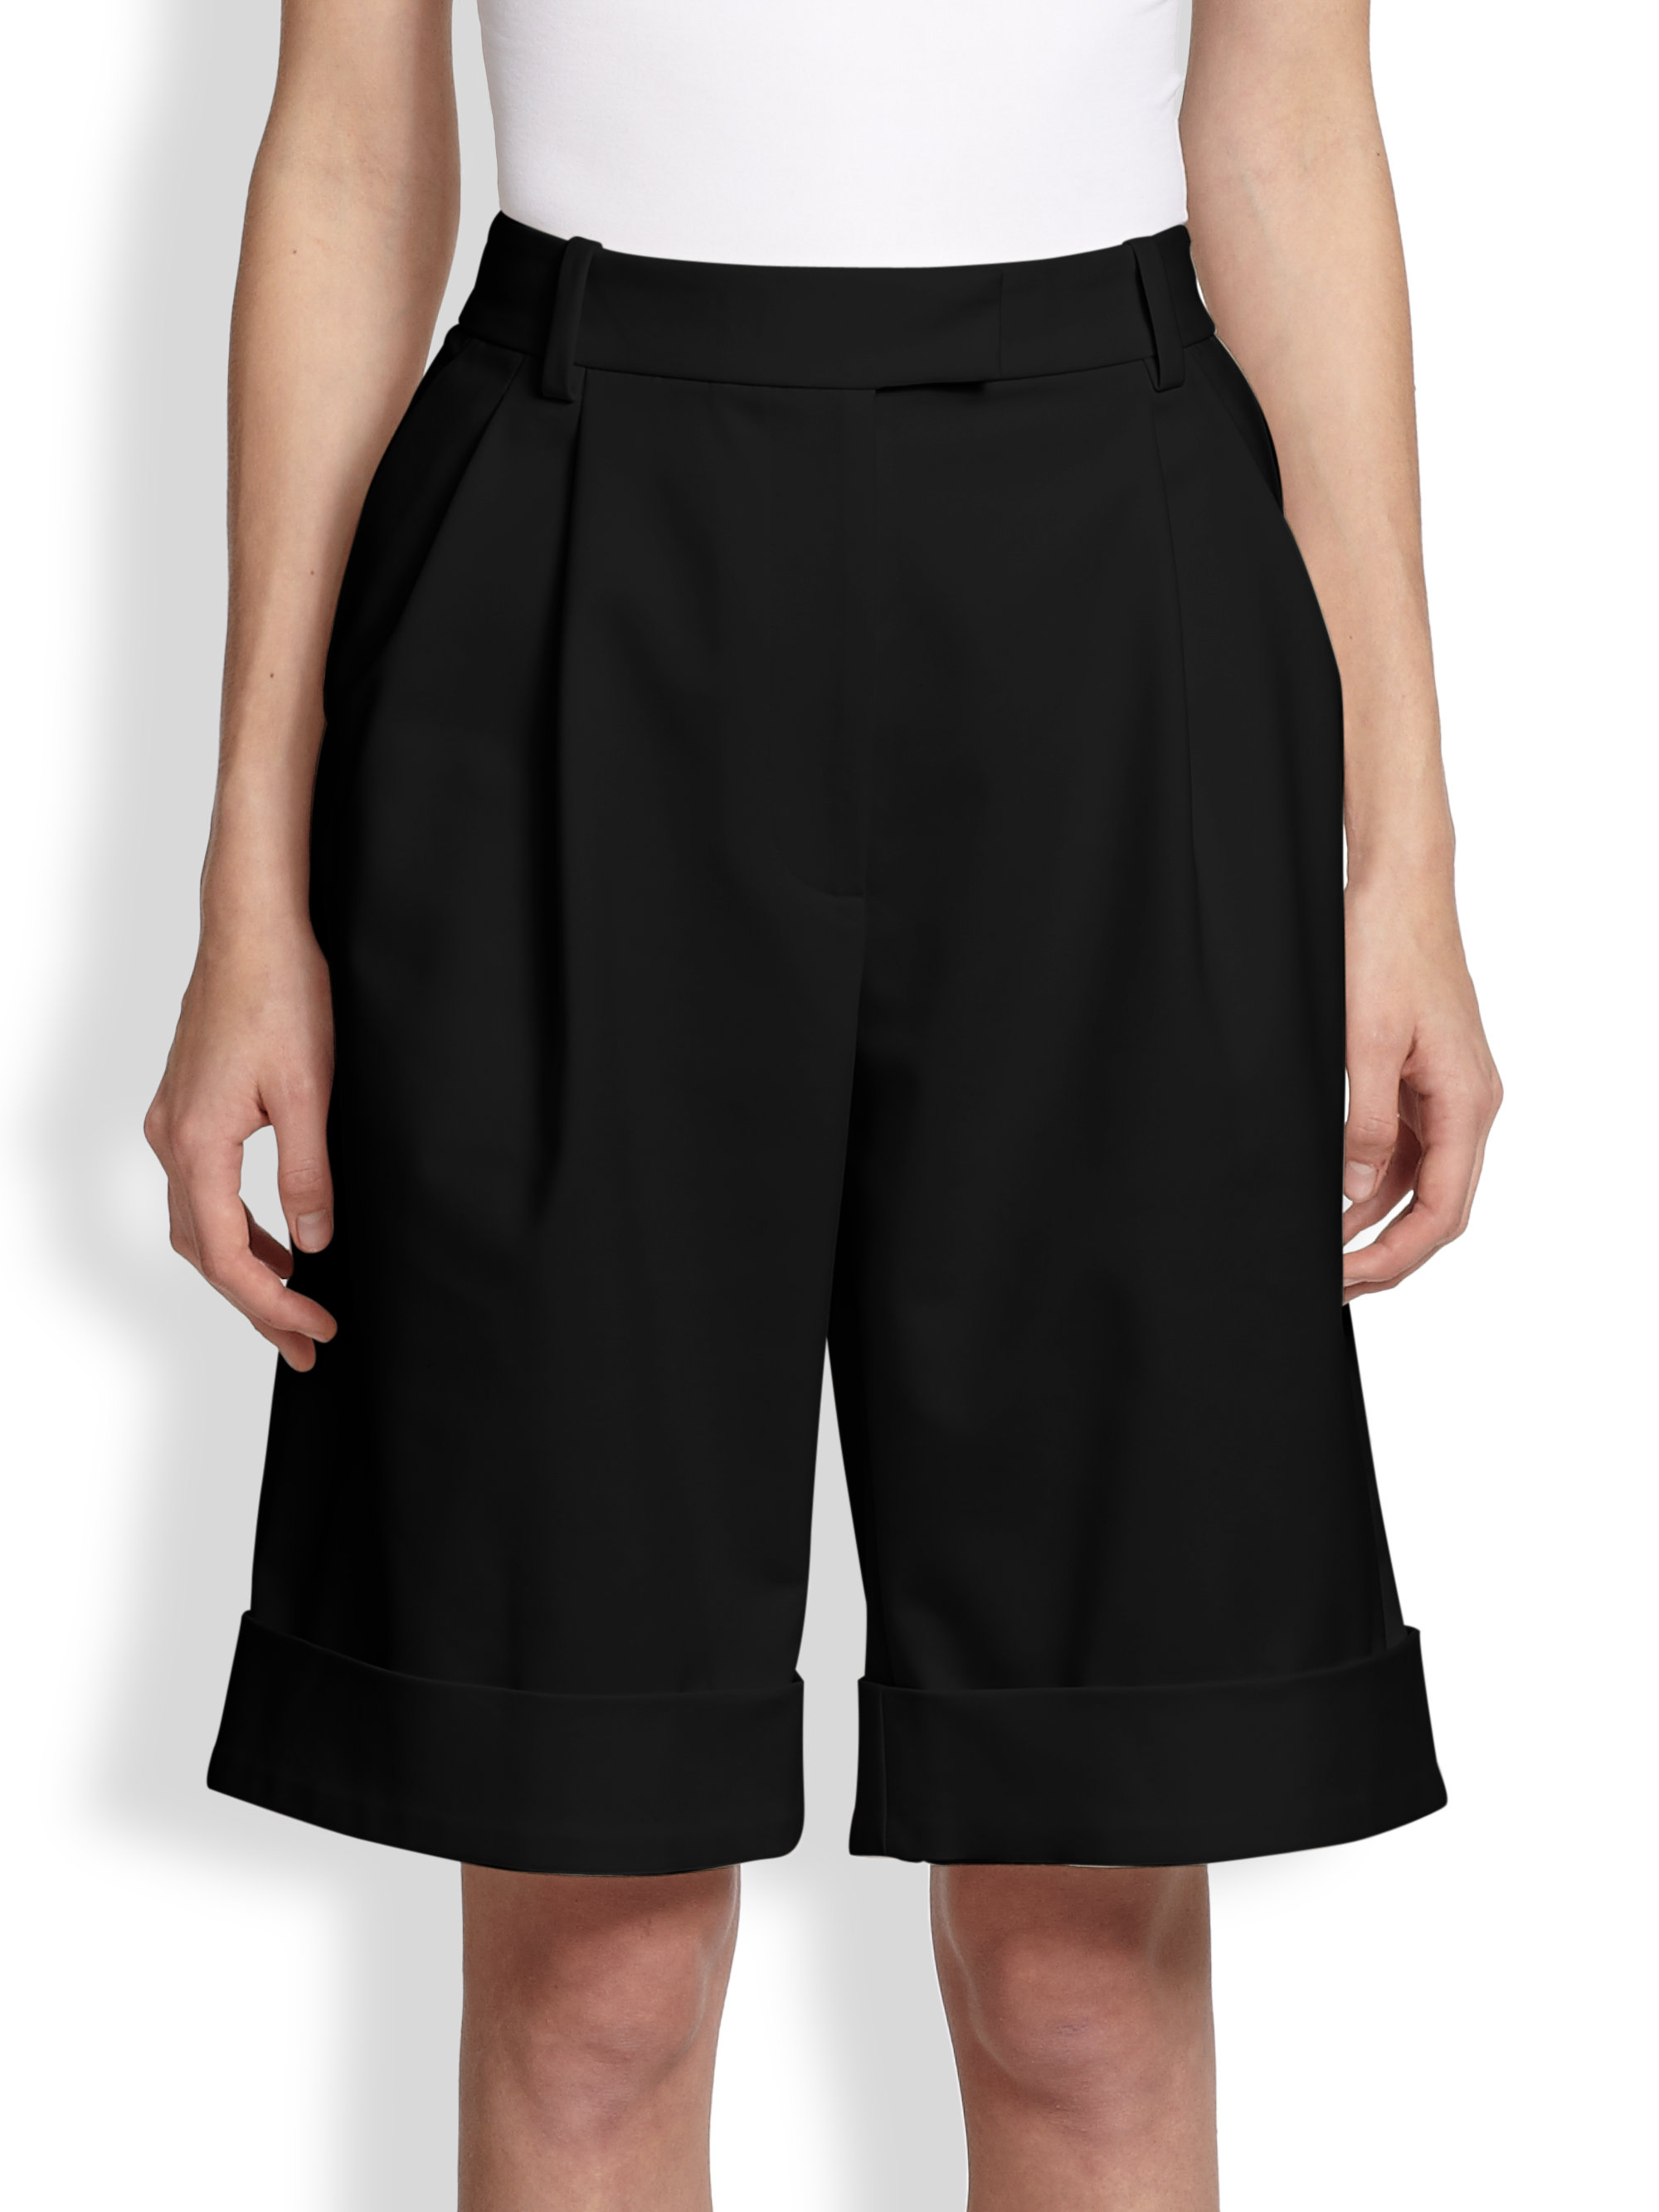 3.1 phillip lim Cuffed Bermuda Shorts in Black | Lyst